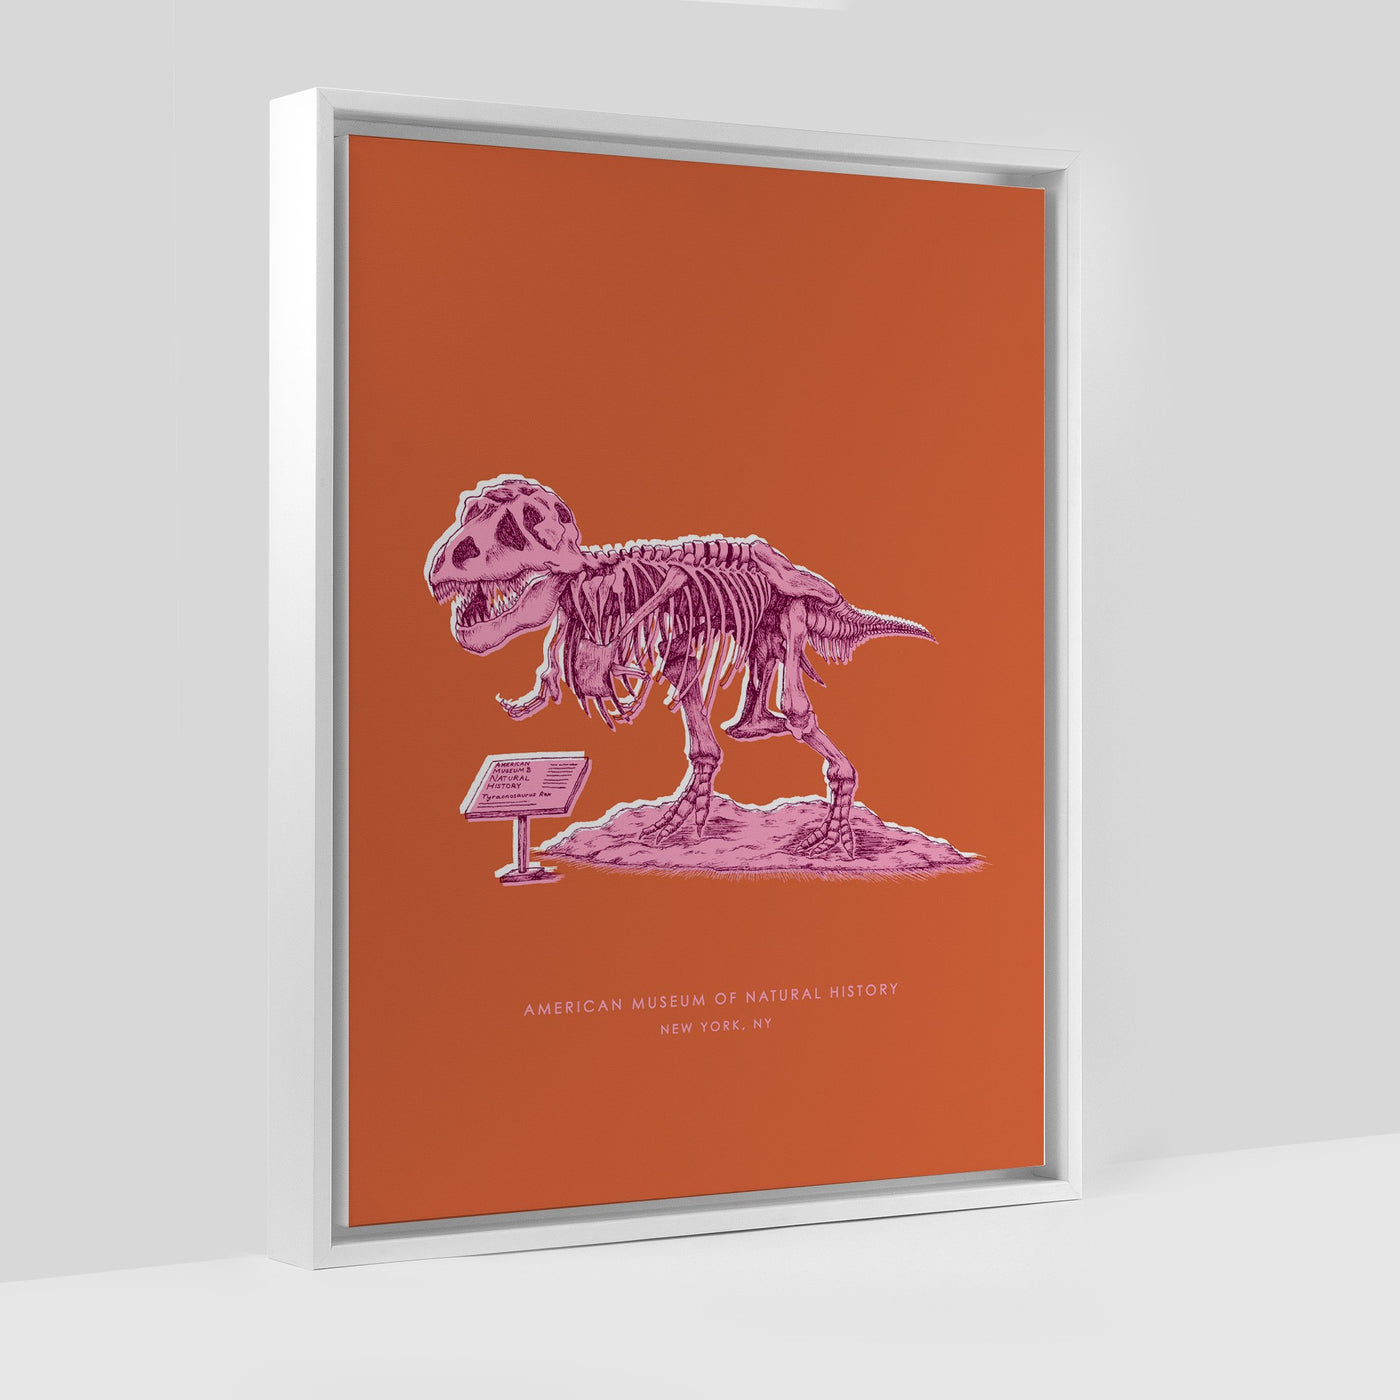 Gallery Prints Orange Canvas / 8x10 / White Frame New York Dinosaur Print dombezalergii